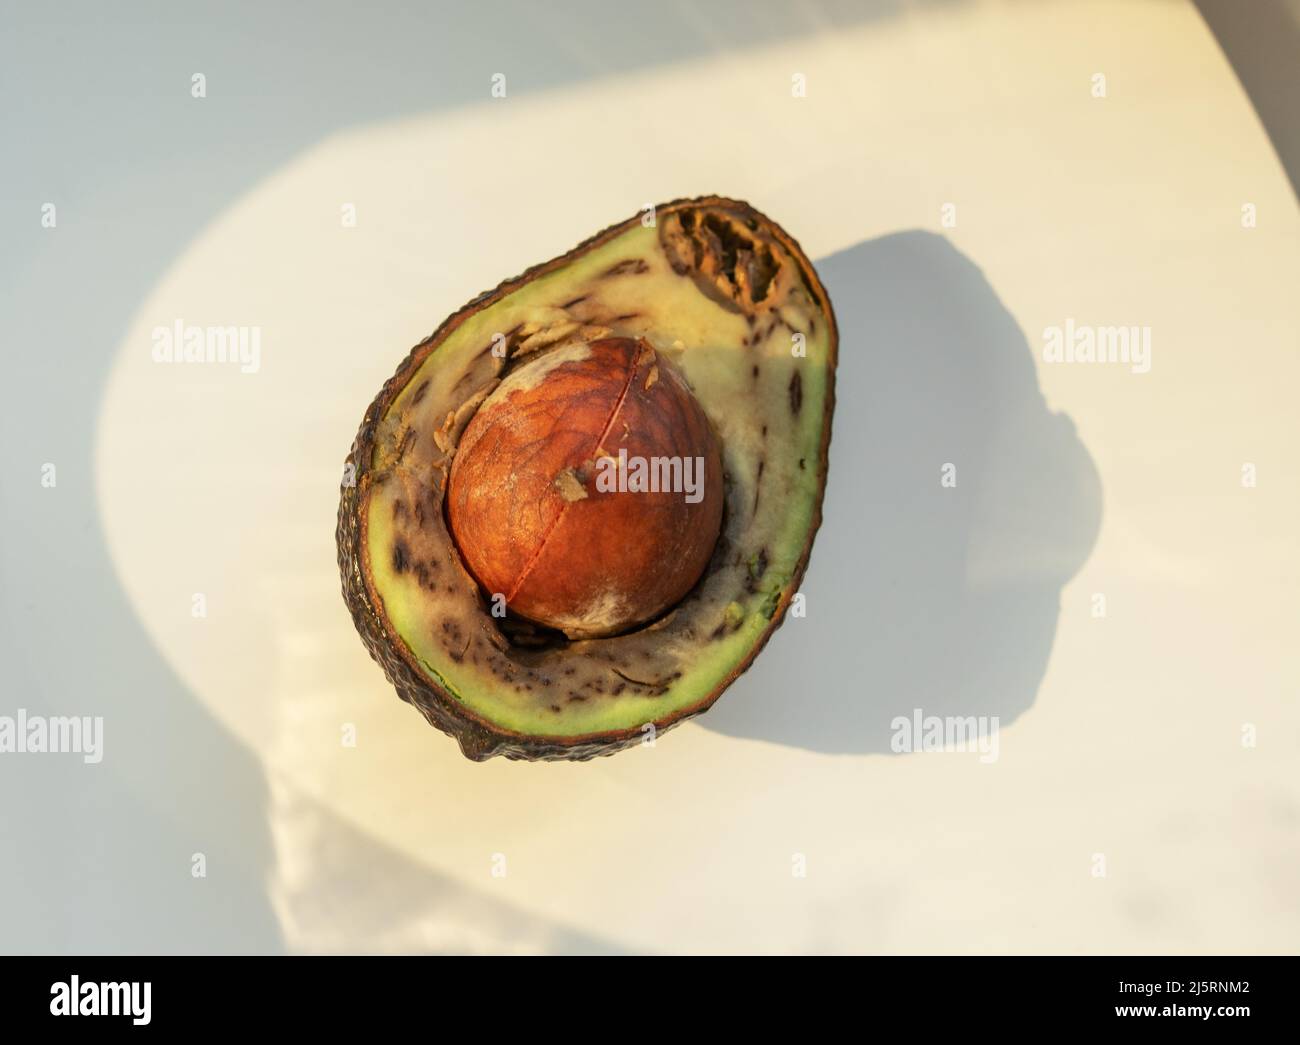 Sample RGB database images a rotten apple, b rotten avocado, c rotten